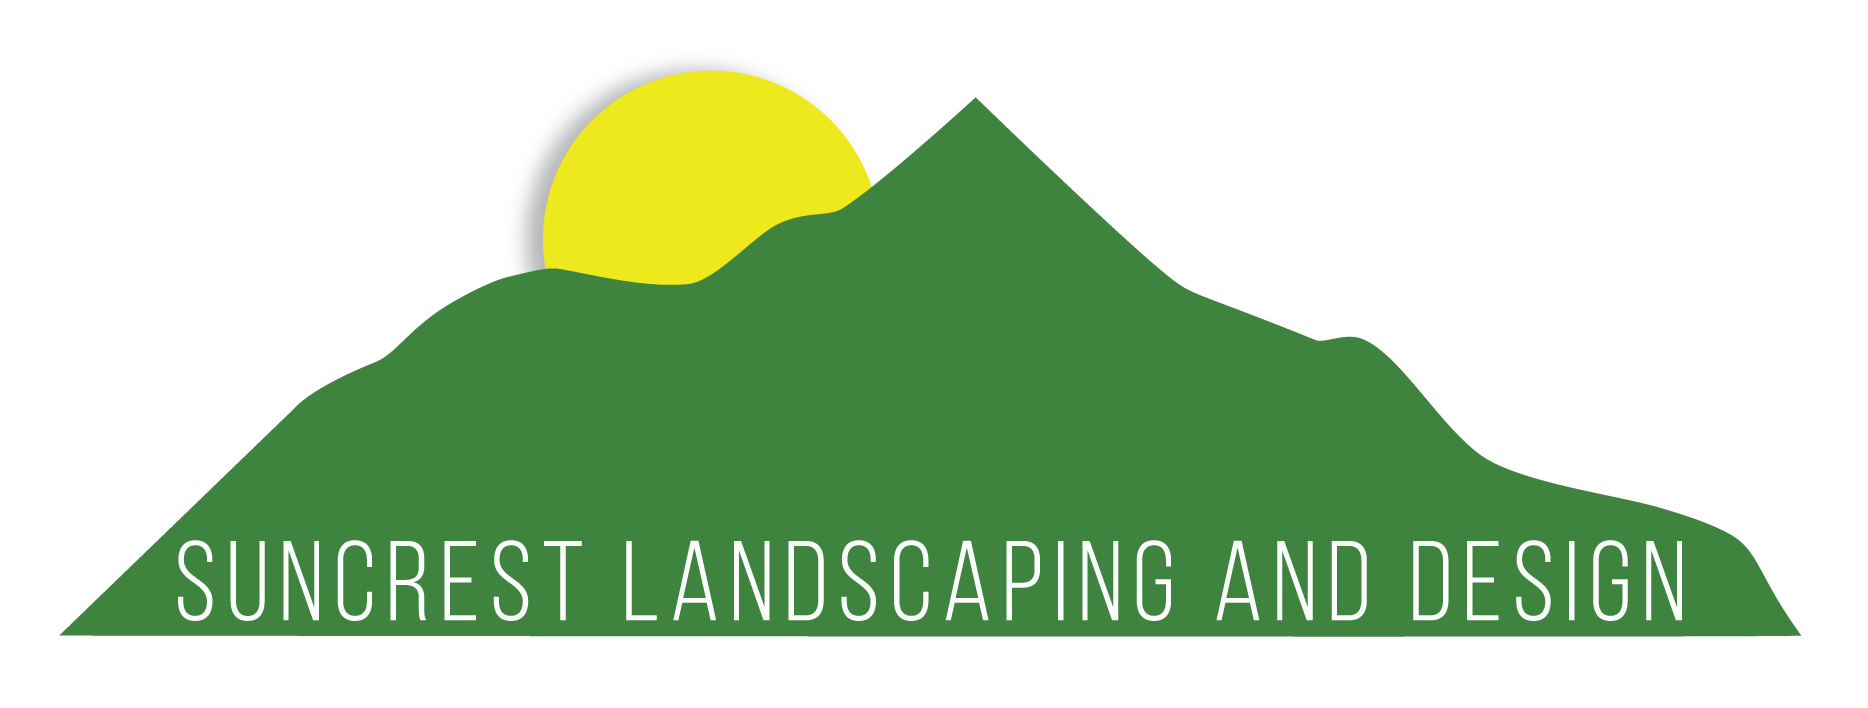 Suncrest Landscaping and Design, Inc